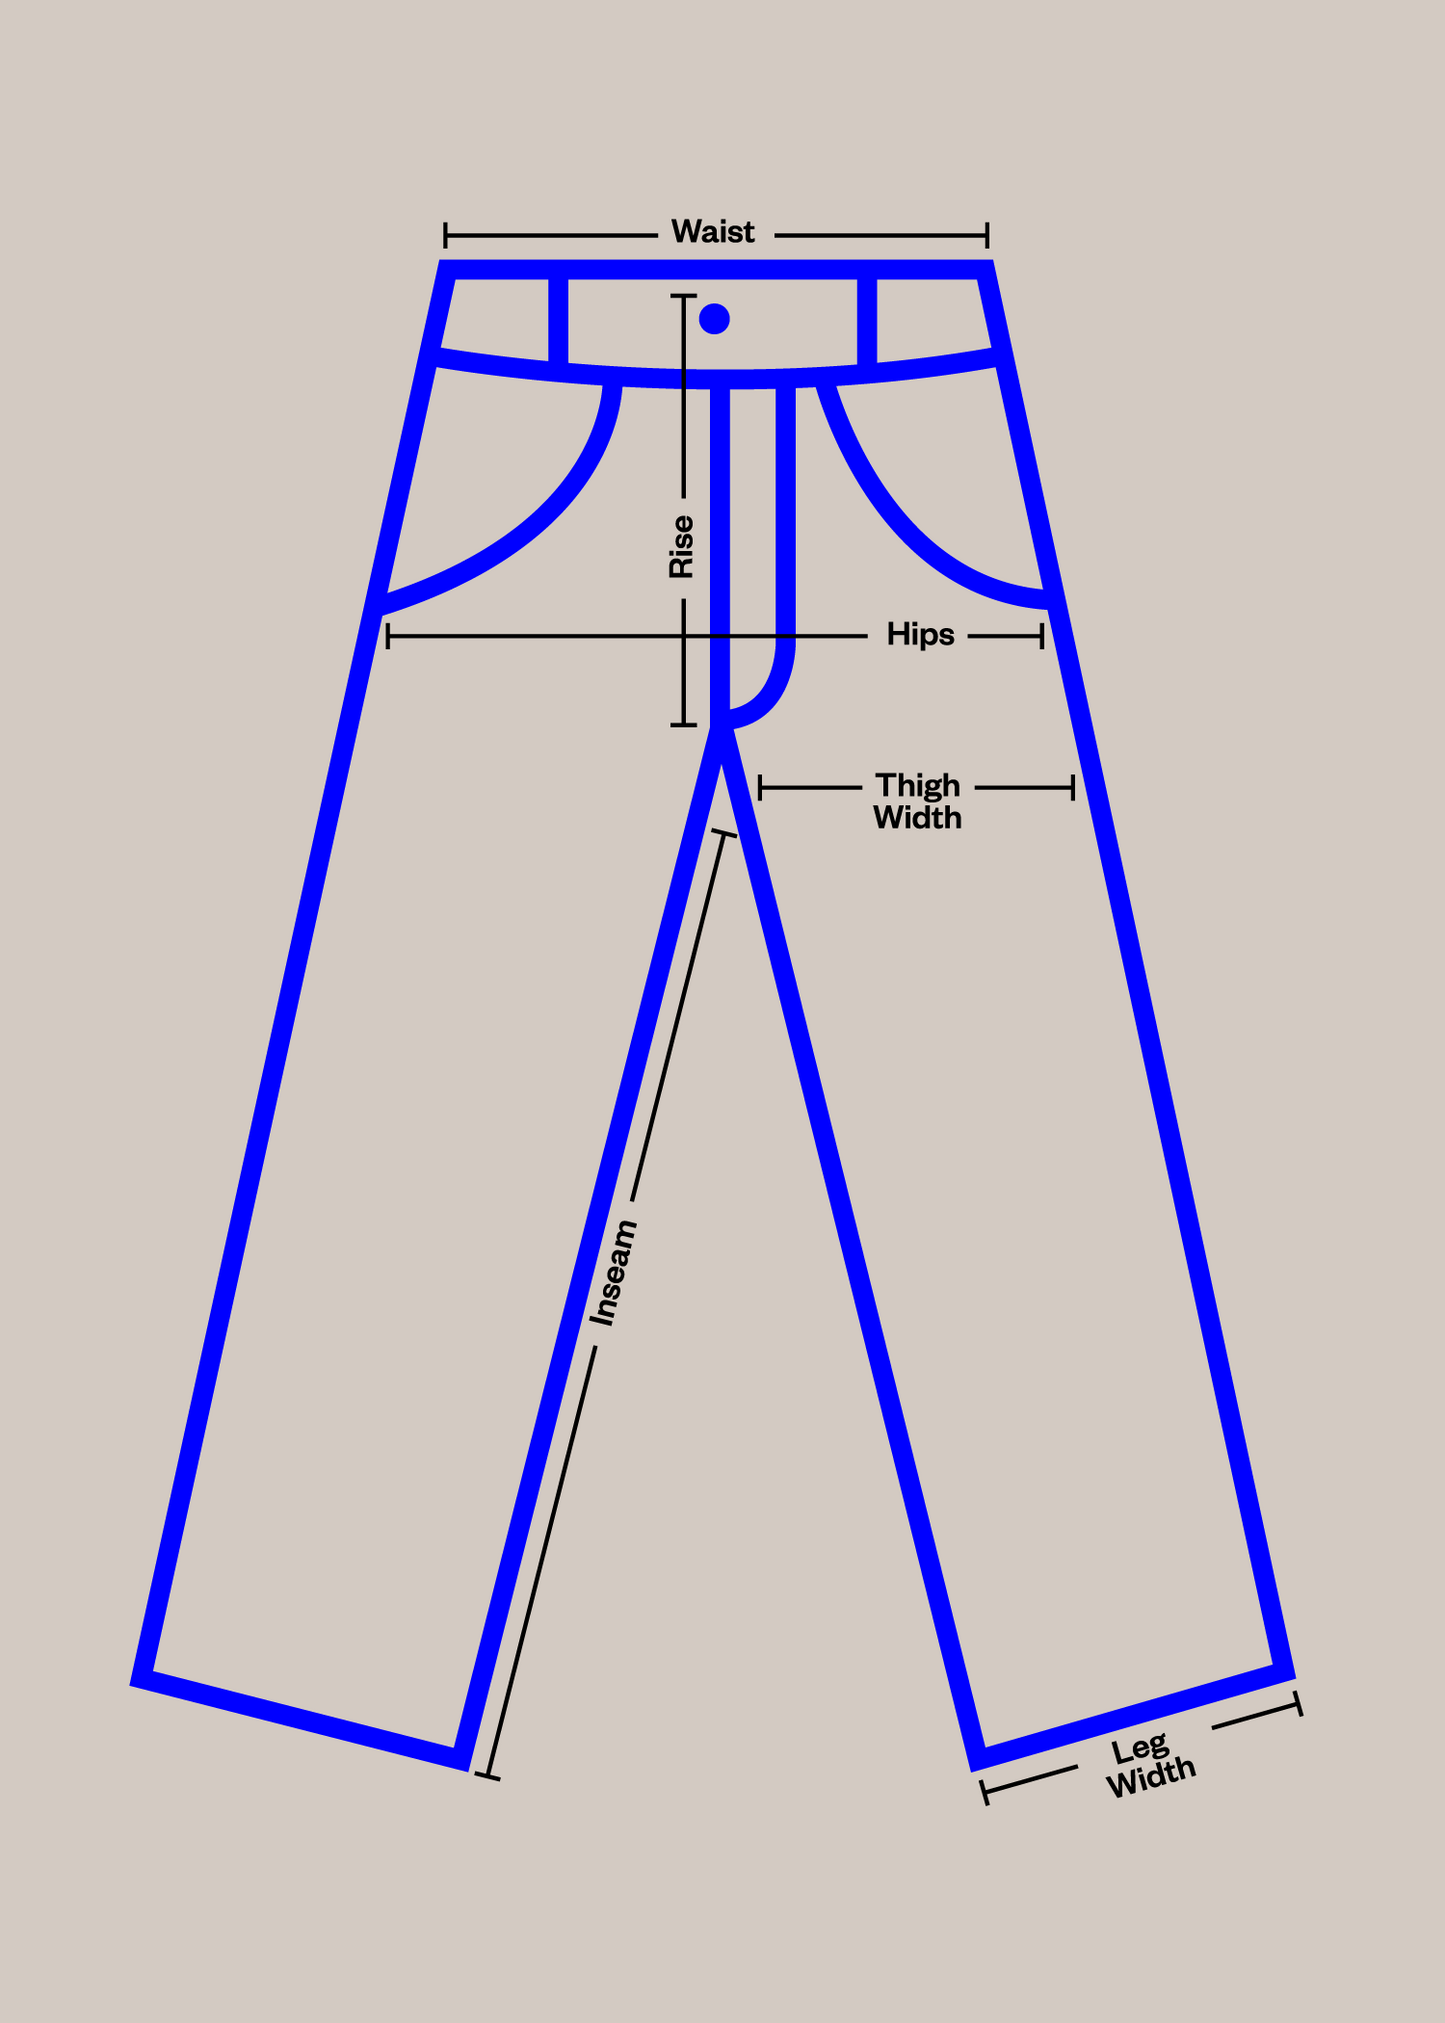 1980s French Workwear Chore Pants Size Women's 38 Men's 40